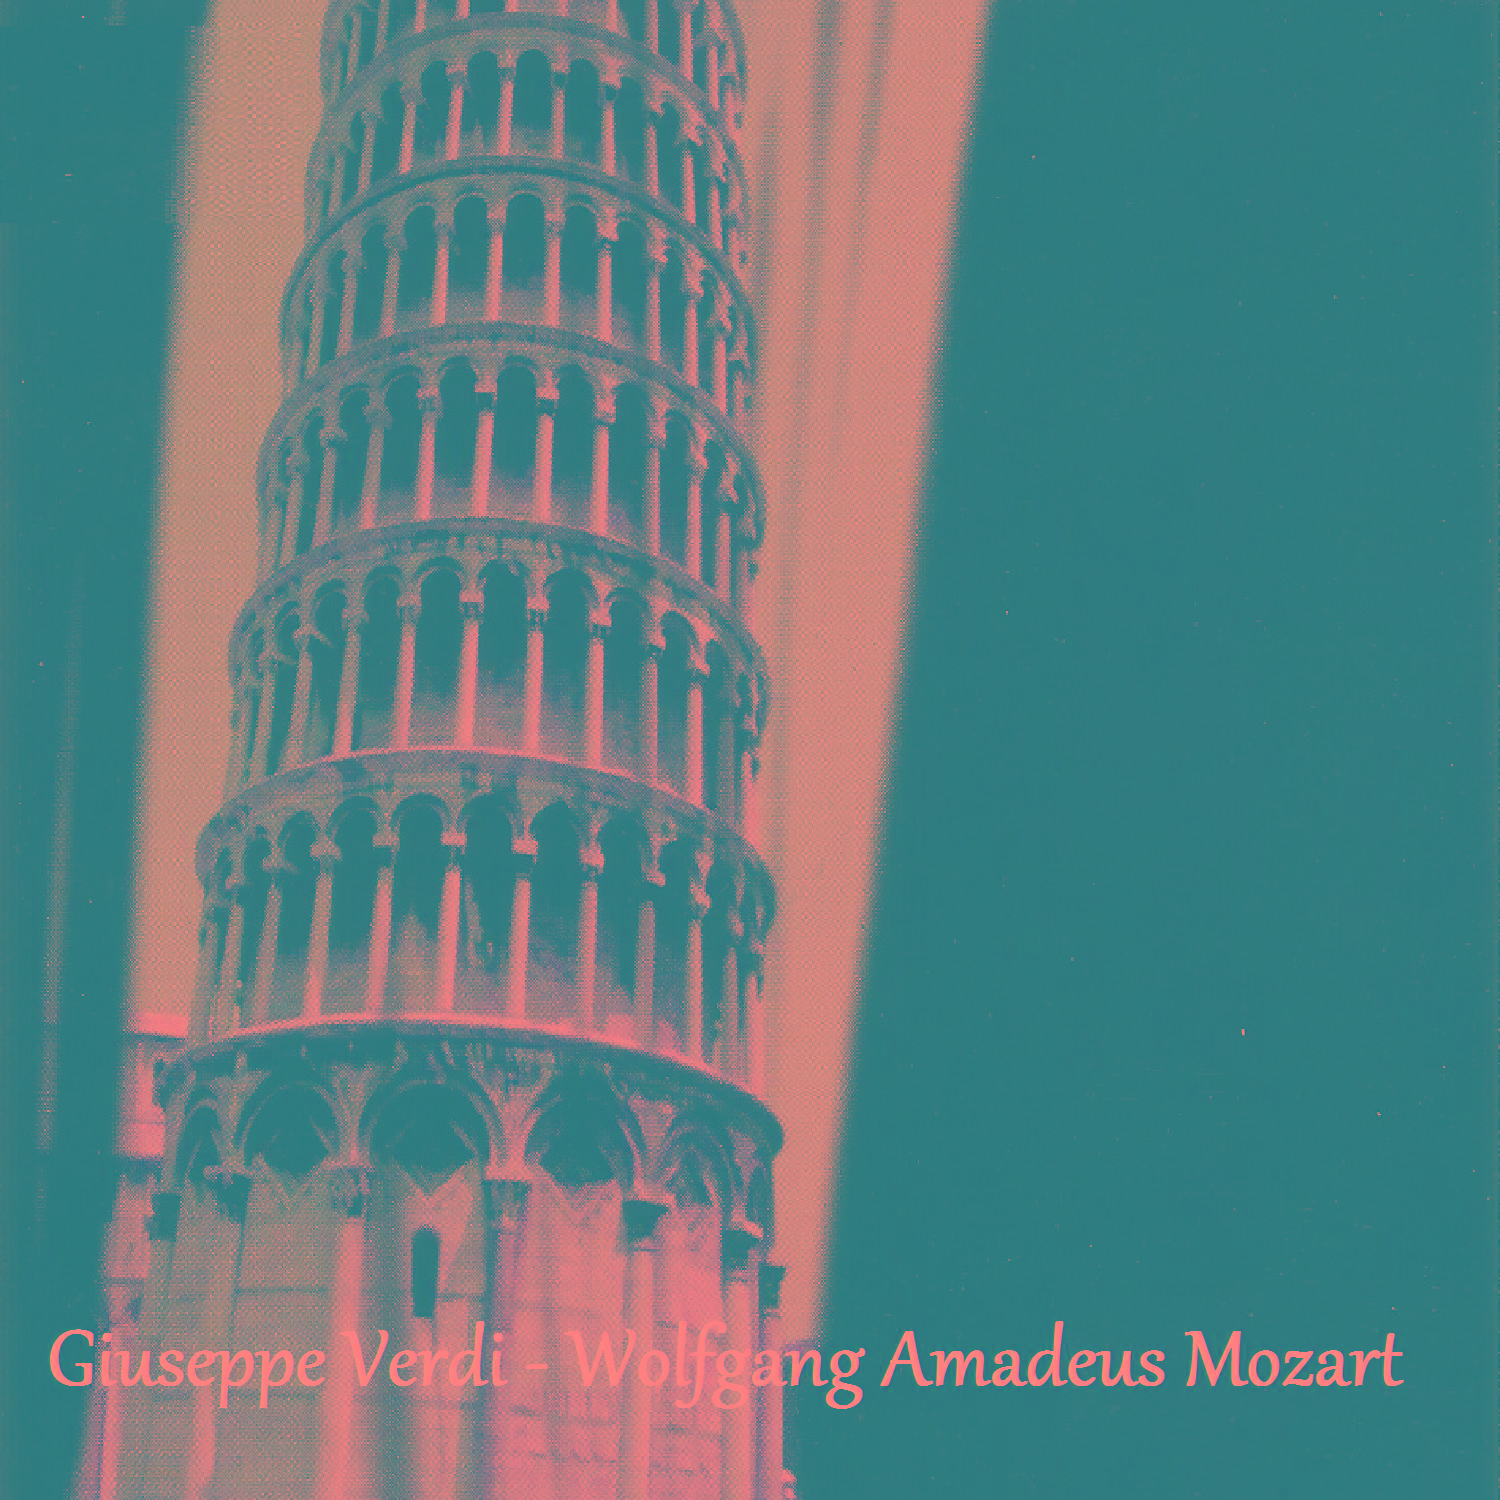 Giuseppe Verdi - Wolfgang Amadeus Mozart